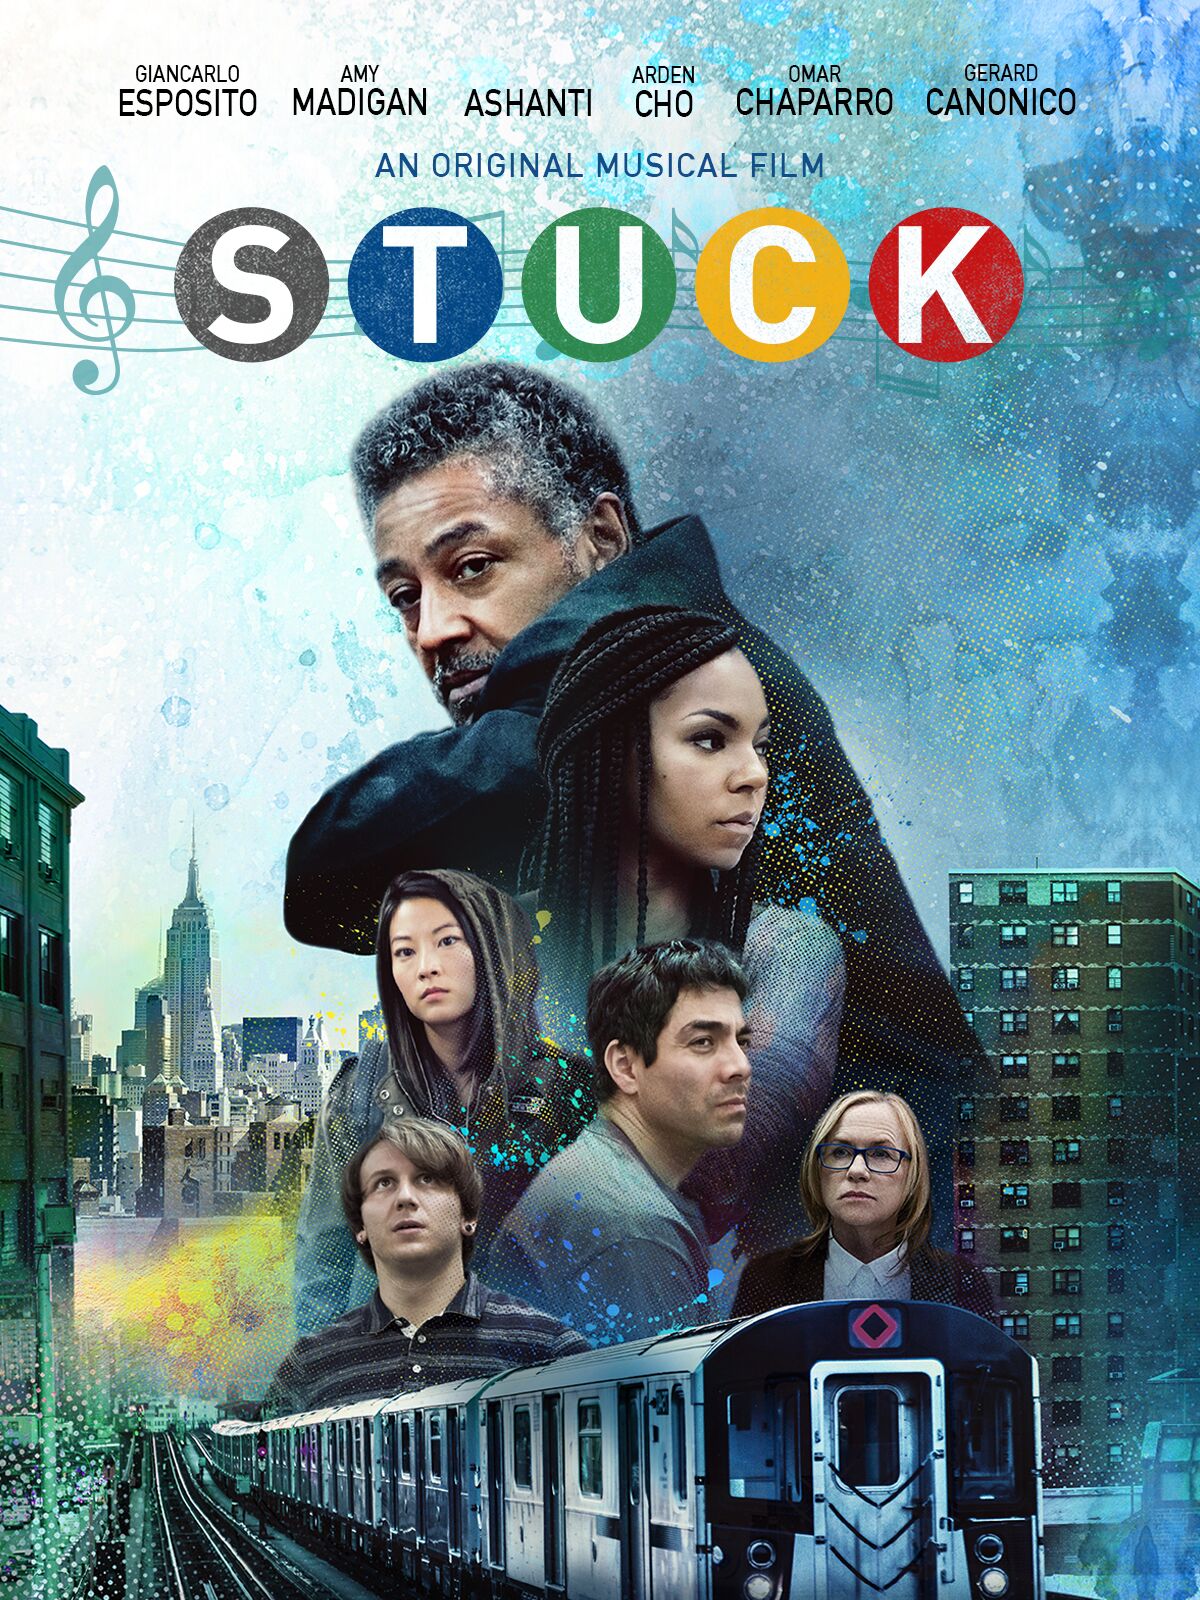 Stuck (2017) Movie Review